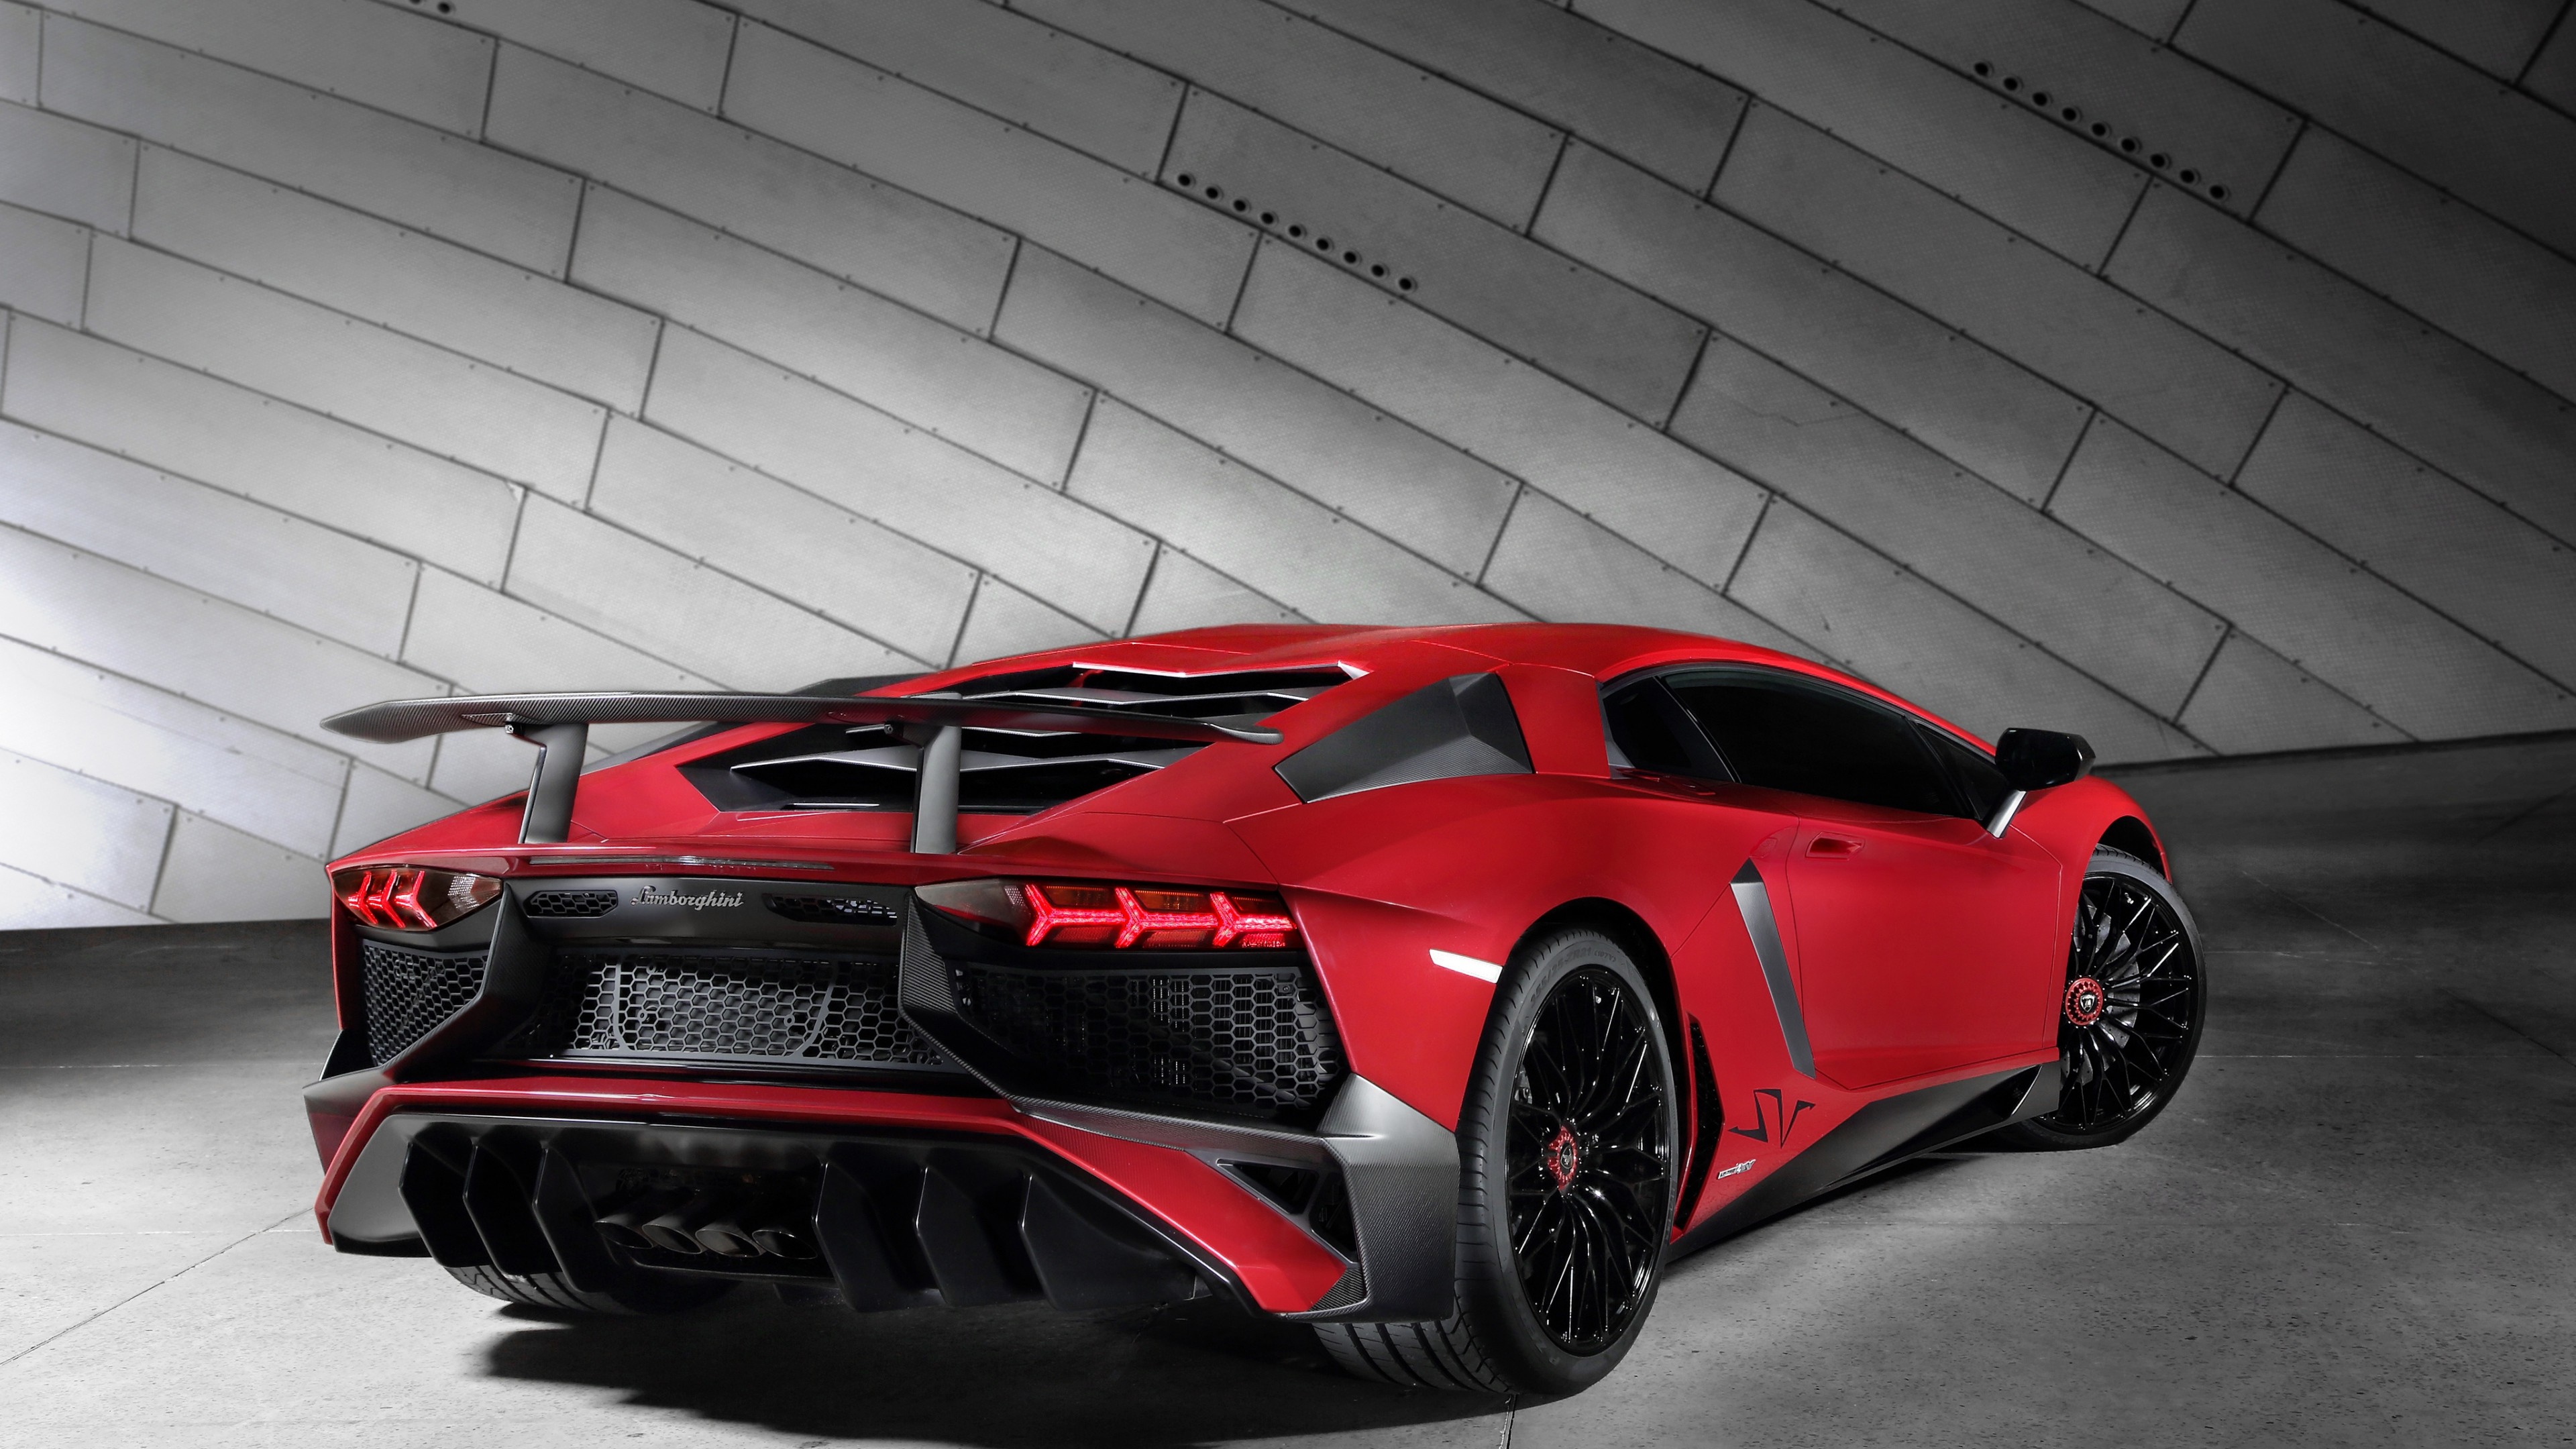 3840x2160 Red Lamborghini Veneno Wallpaper Hd Ultra Desktop Image